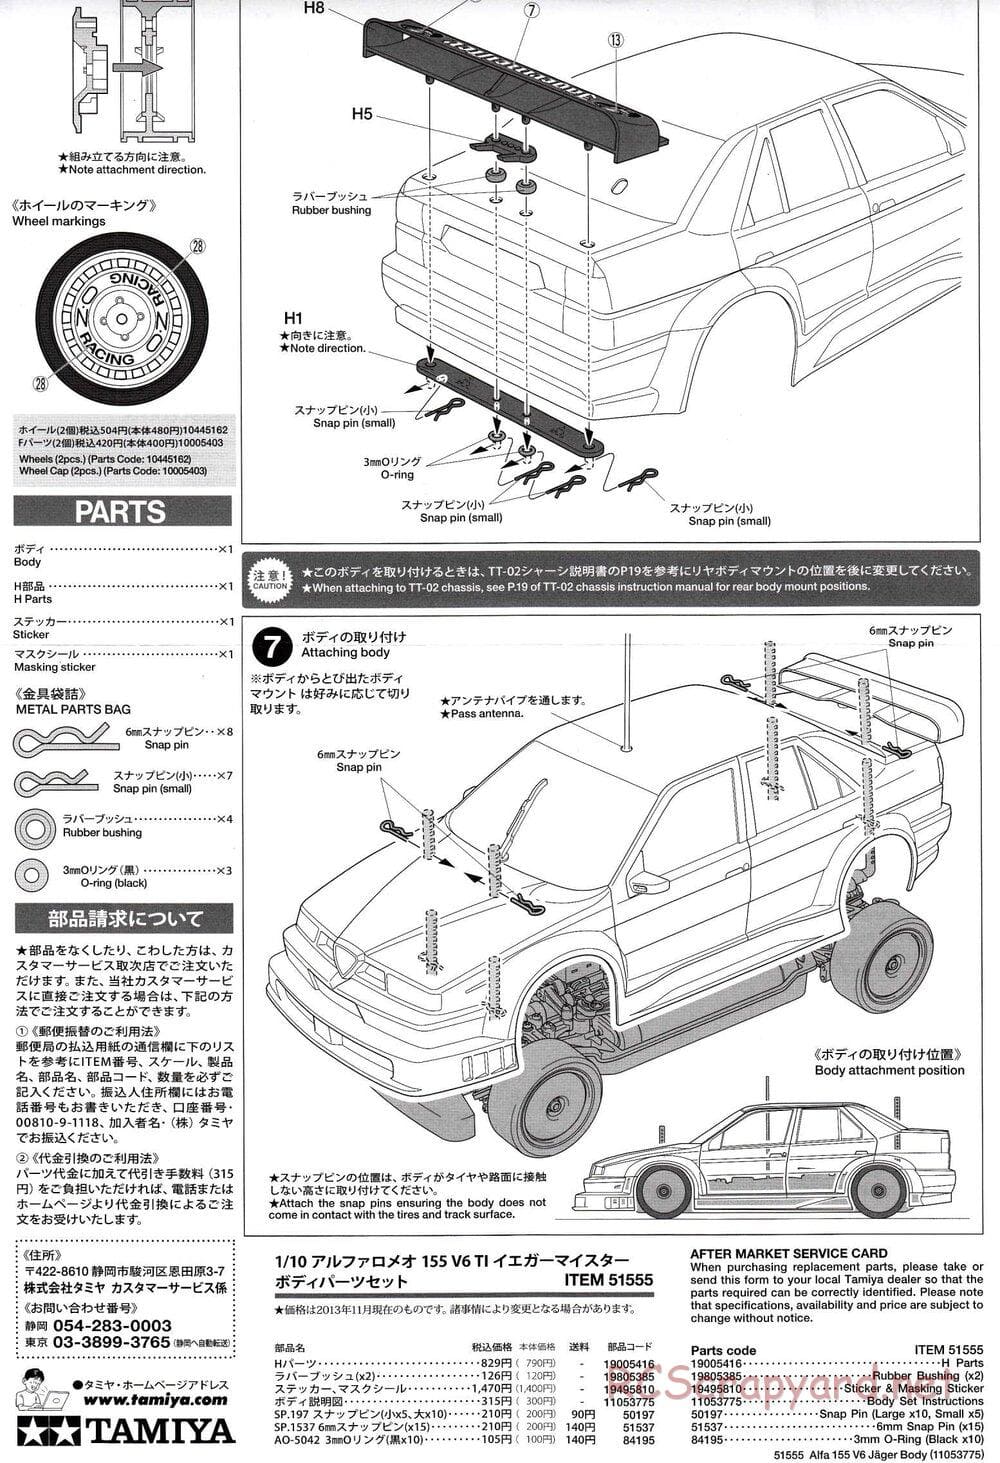 Tamiya - Alfa Romeo 155 V6 TI Jgermeister - TT-02 Chassis - Body Manual - Page 4